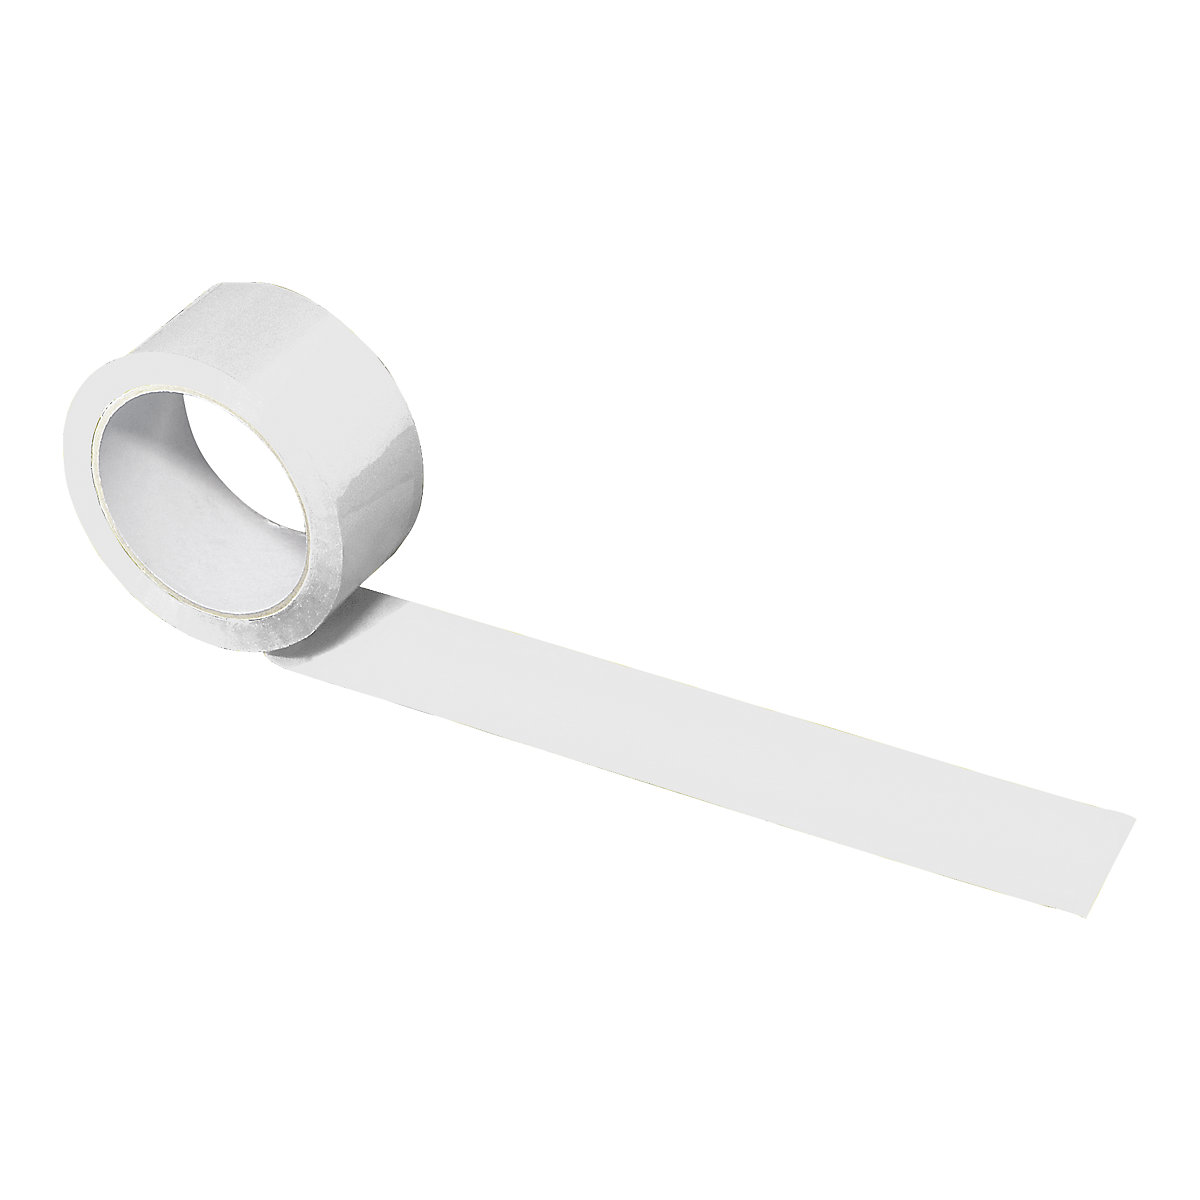 Balicí páska z PP, v různých barvách, bal.j. 108 rolí, bílá, šířka pásky 50 mm-4